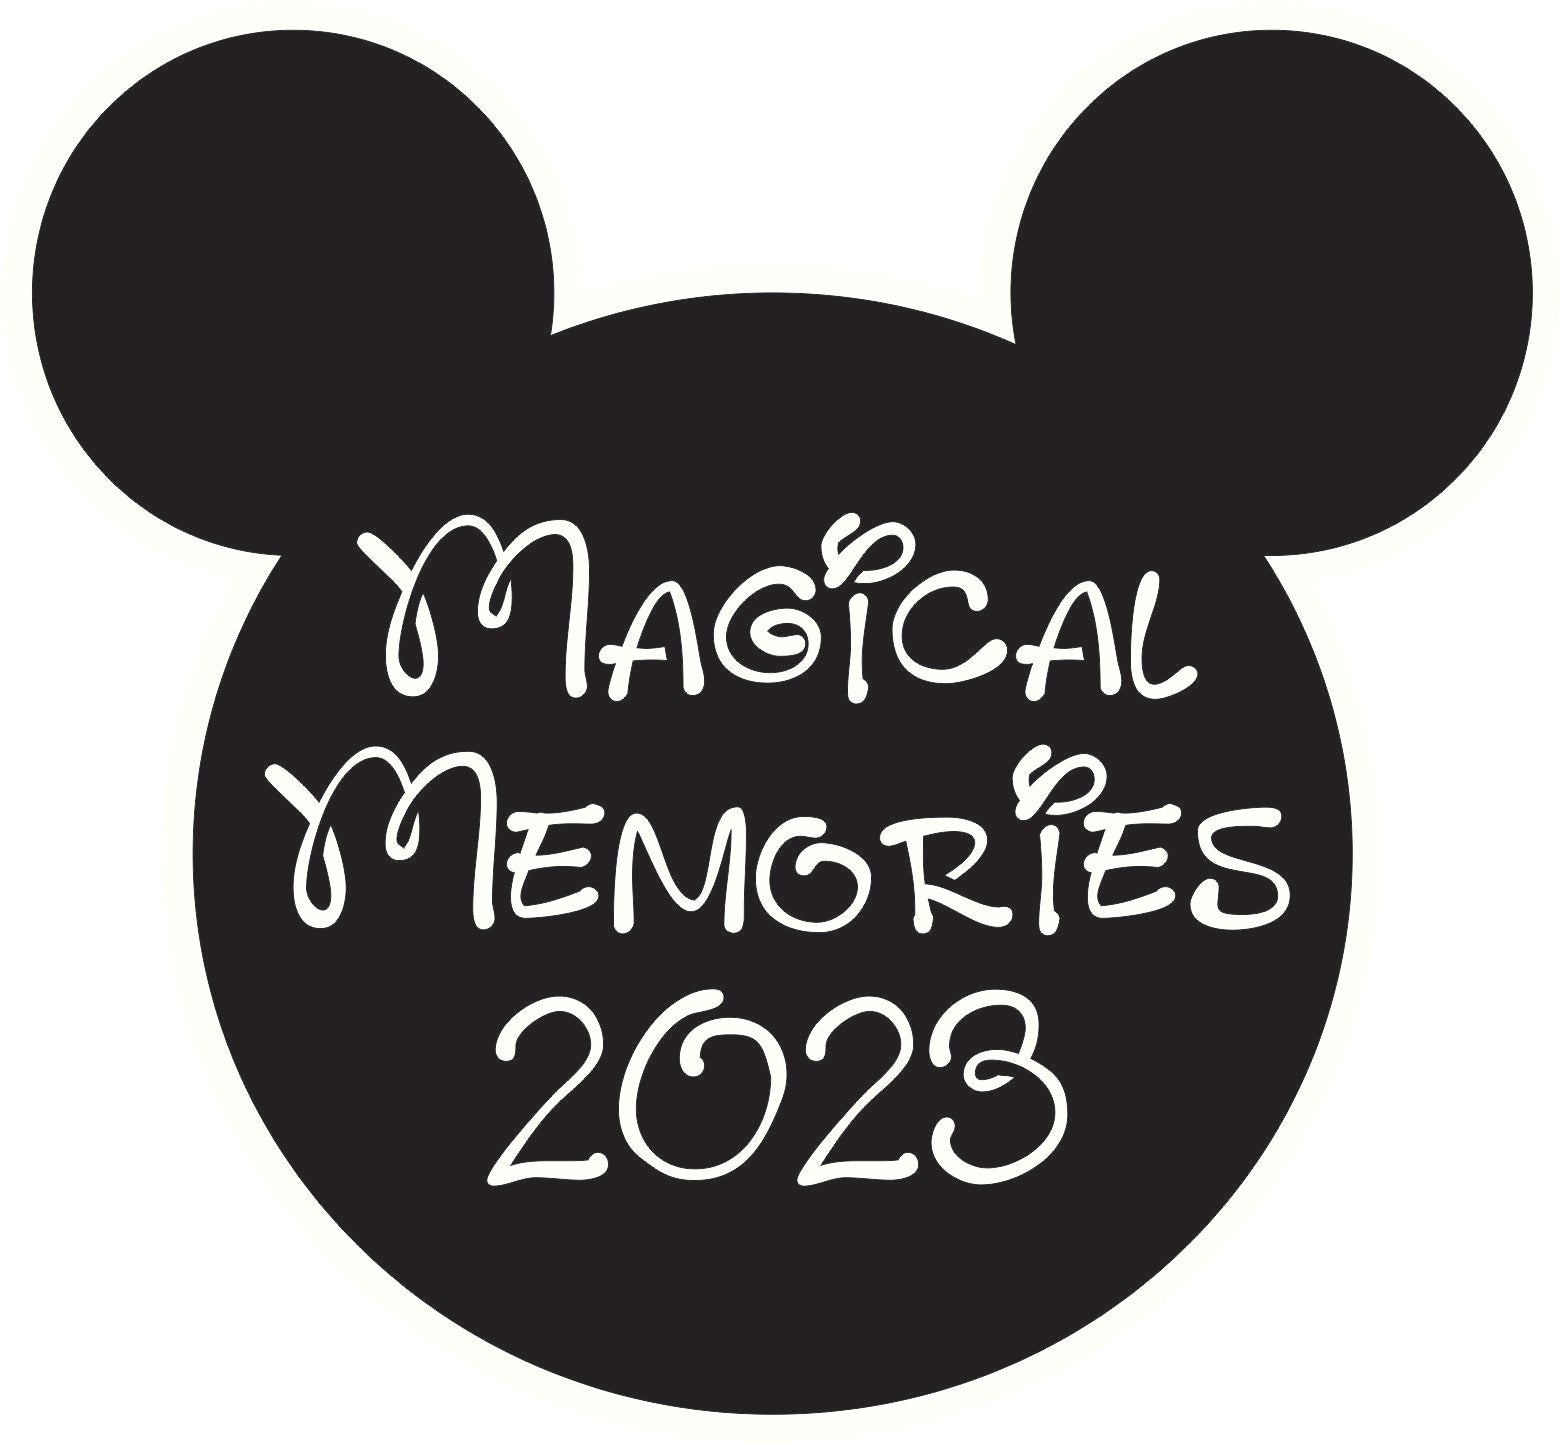 Disneyana Collection Magical Memories 2023 Ears 4 x 4 Laser Cut Scrapbook Embellishment by SSC Laser Designs